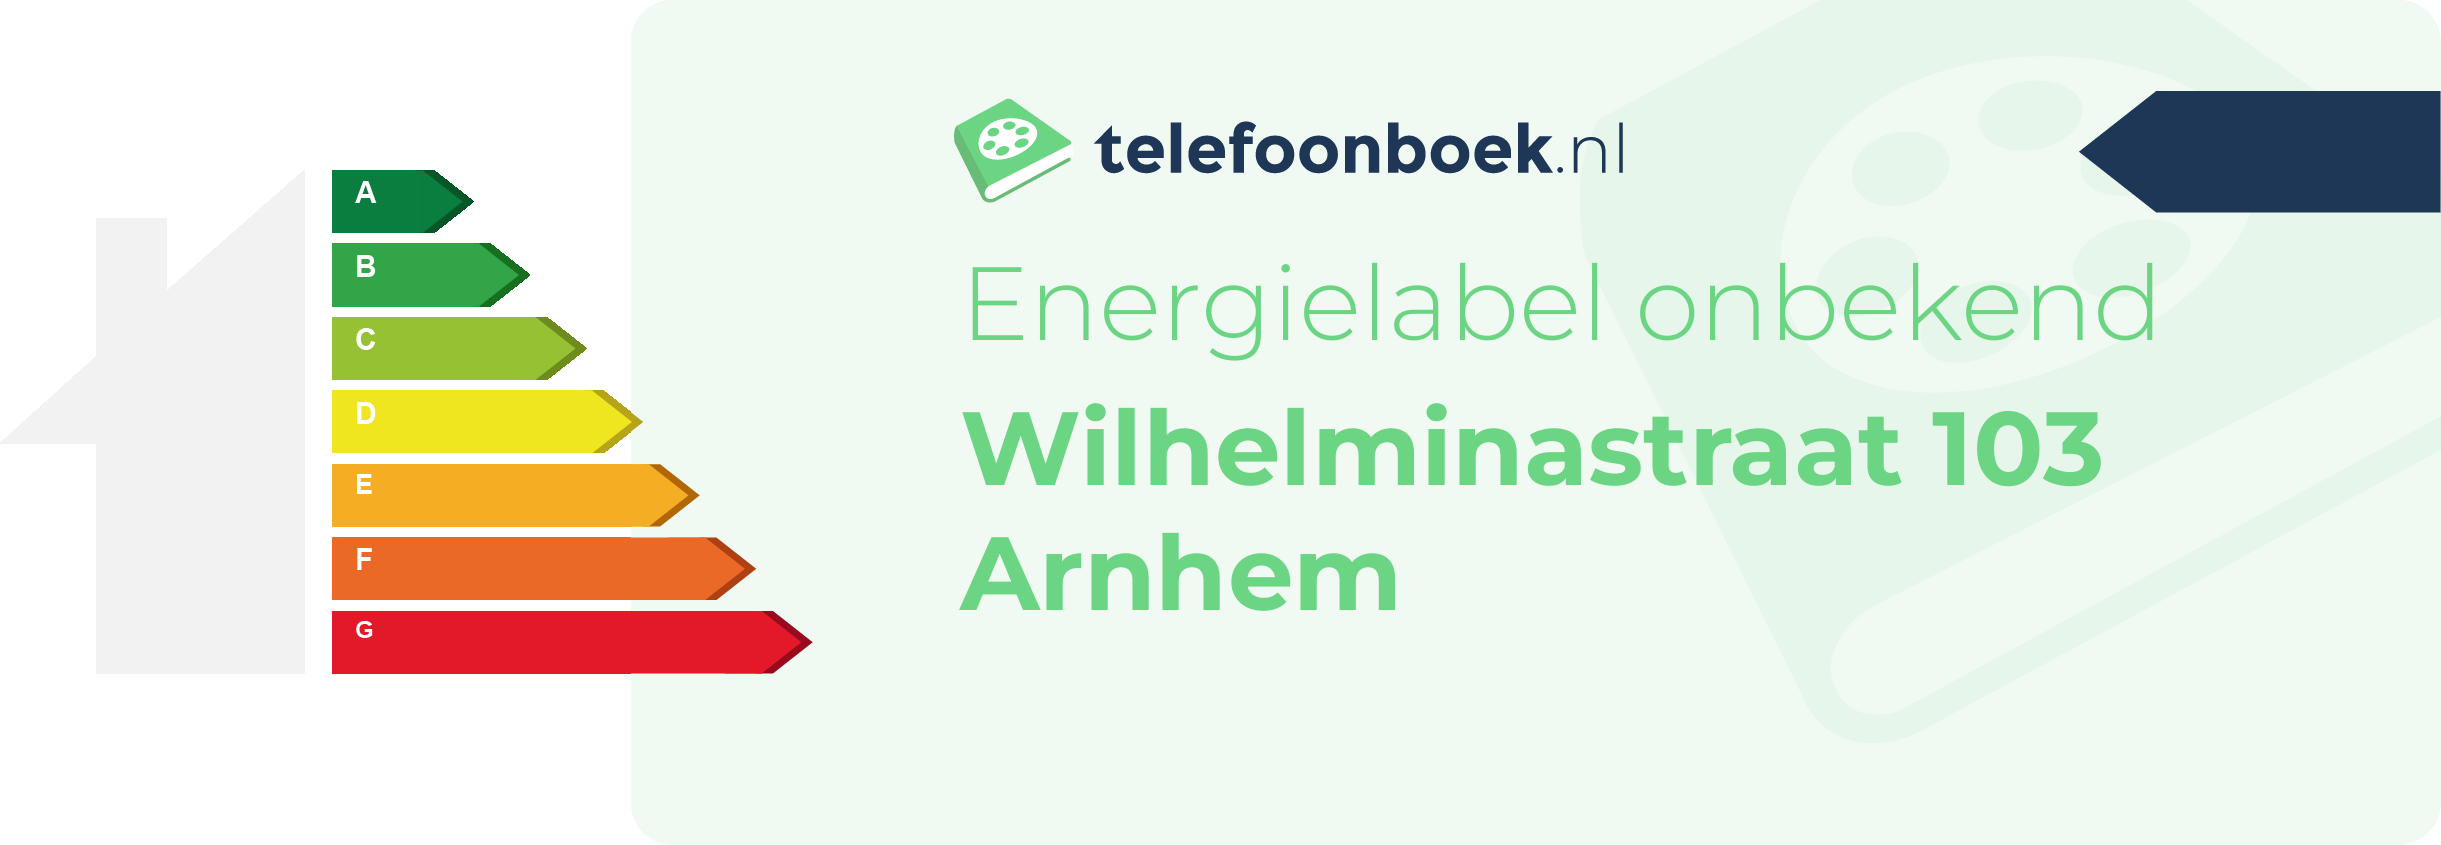 Energielabel Wilhelminastraat 103 Arnhem